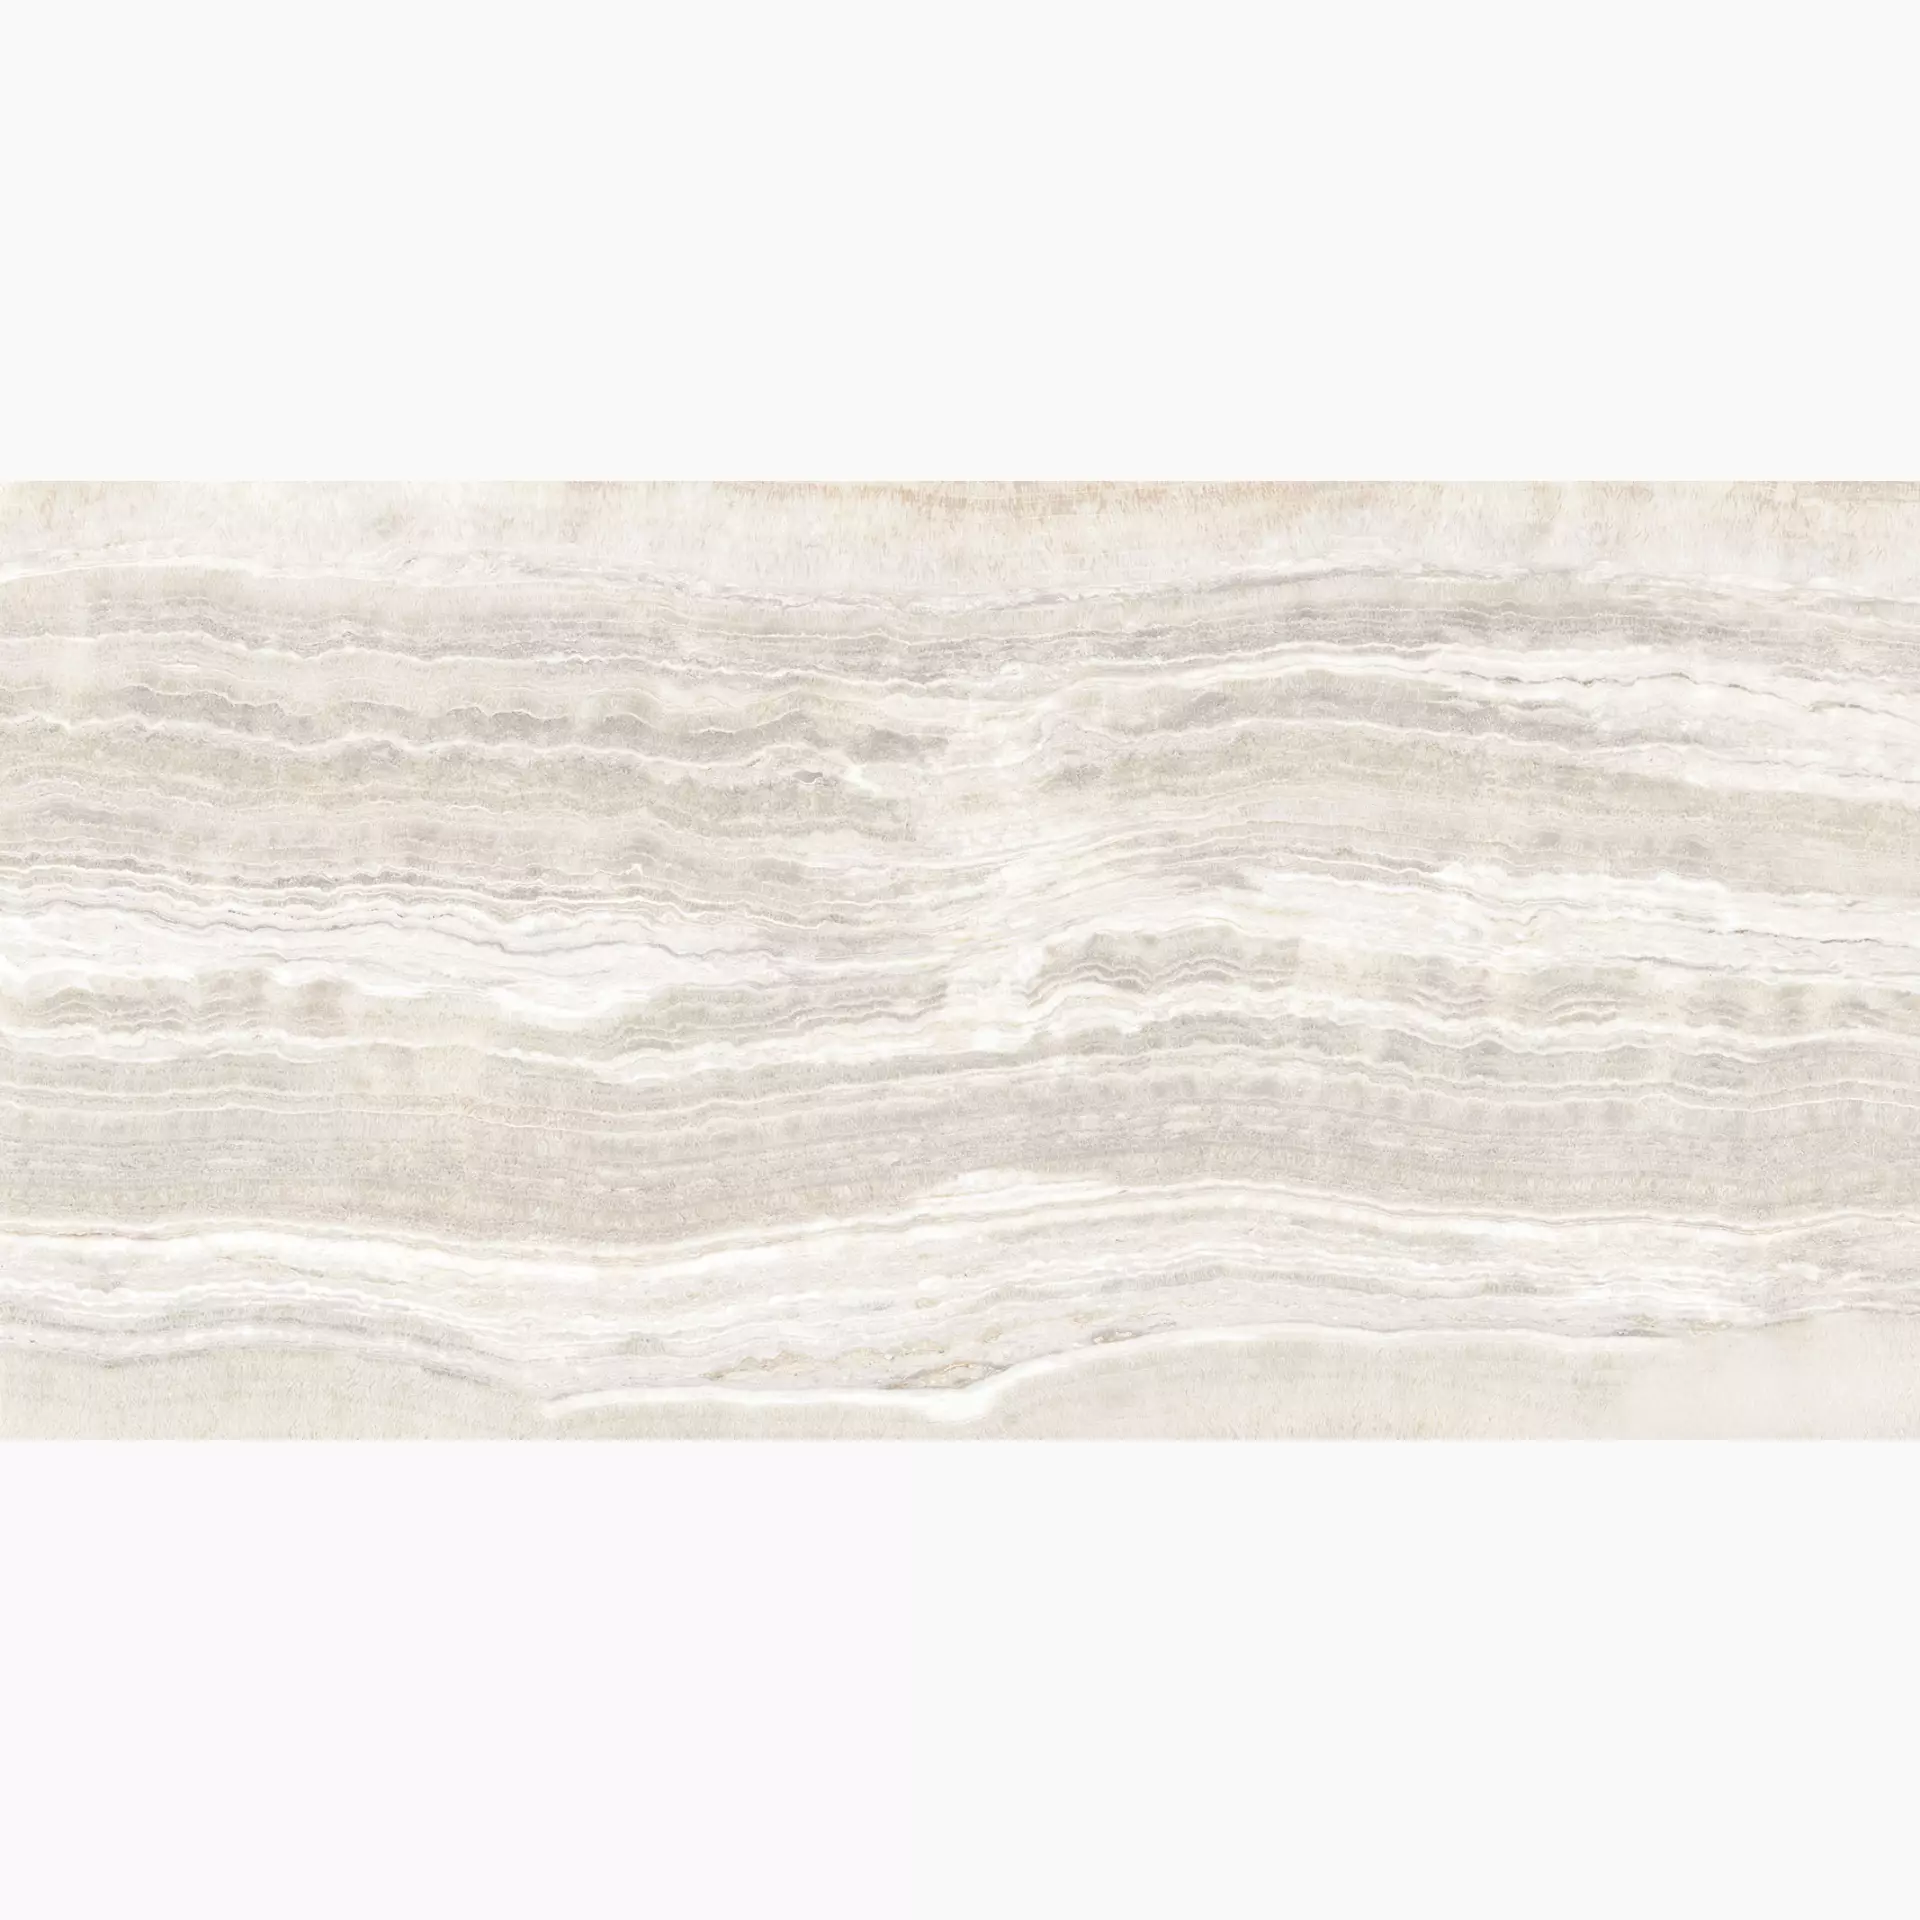 Florim Onyx Of Cerim Sand Naturale – Matt 753700 30x60cm rectified 9mm